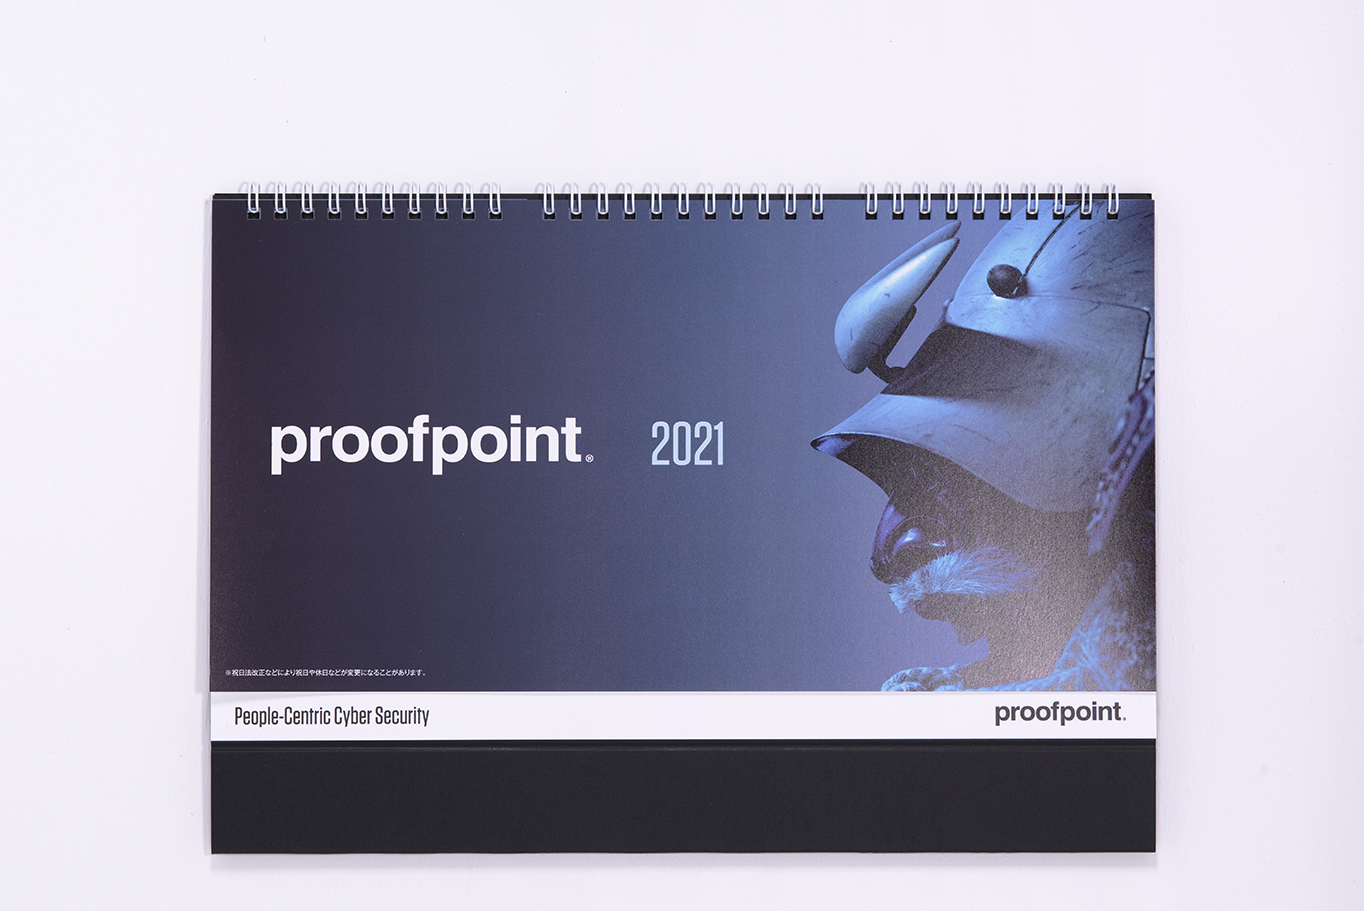 Proofpoint様の2021年卓上カレンダーの表紙